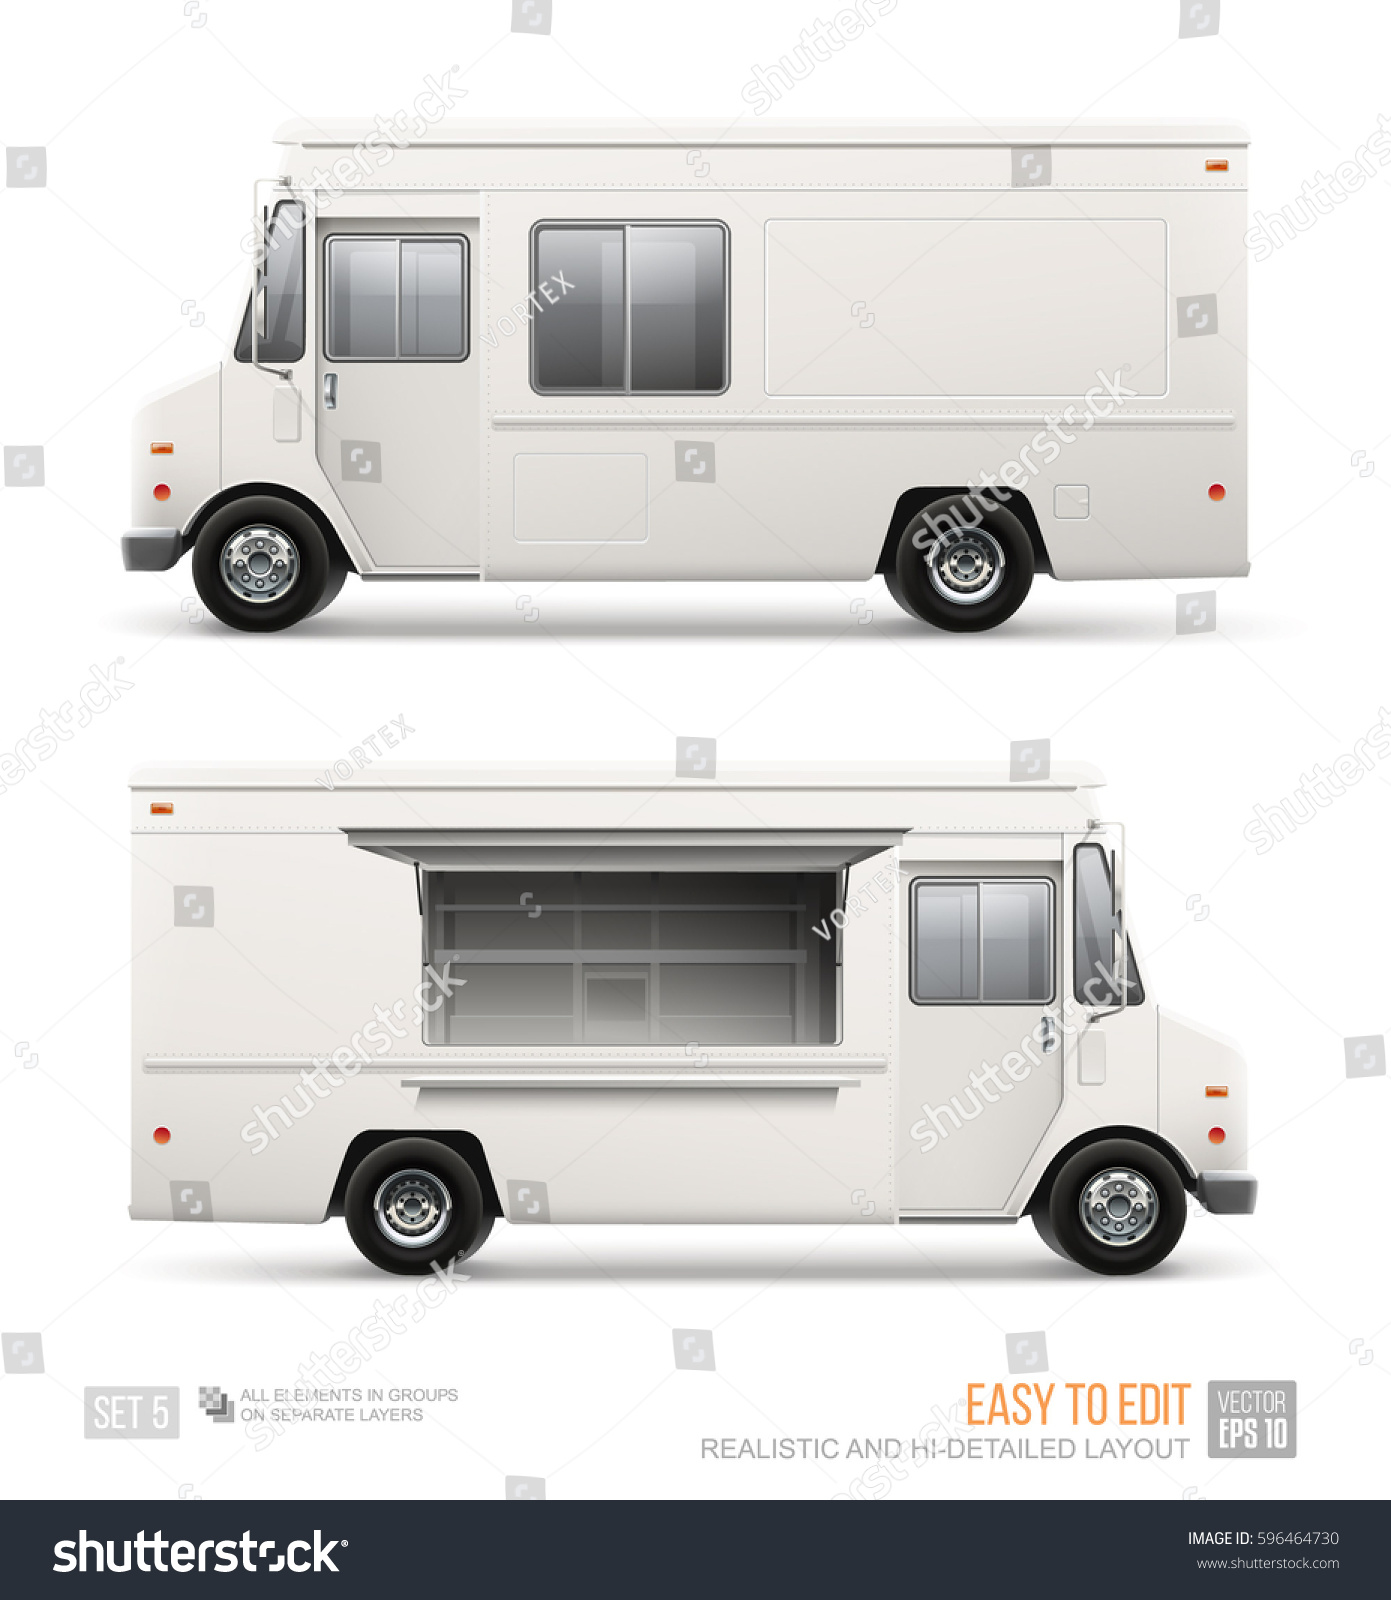 Realistic Food Truck Vector Template Car Stock Vector 596464730 ...